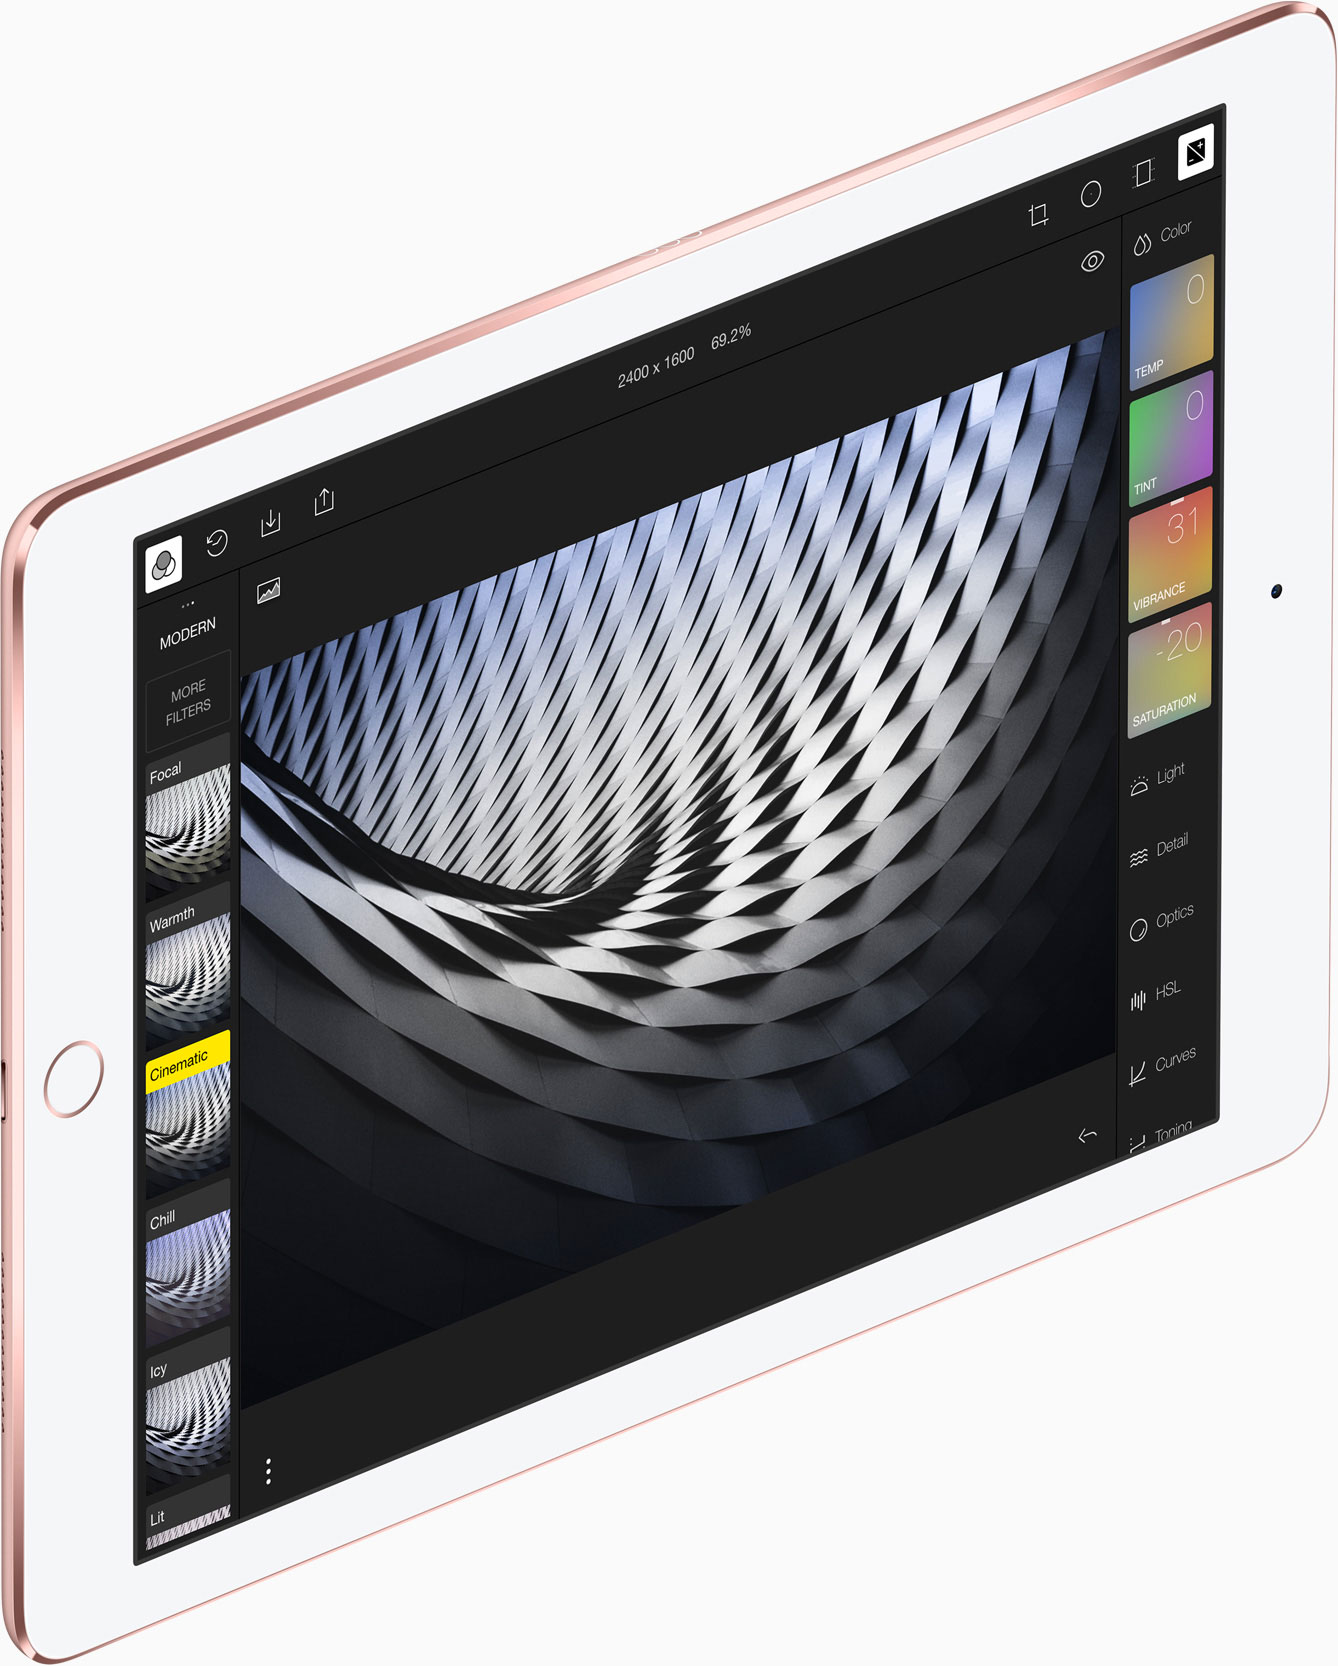 iPad Pro mini o con pantalla de 9,7 pulgadas